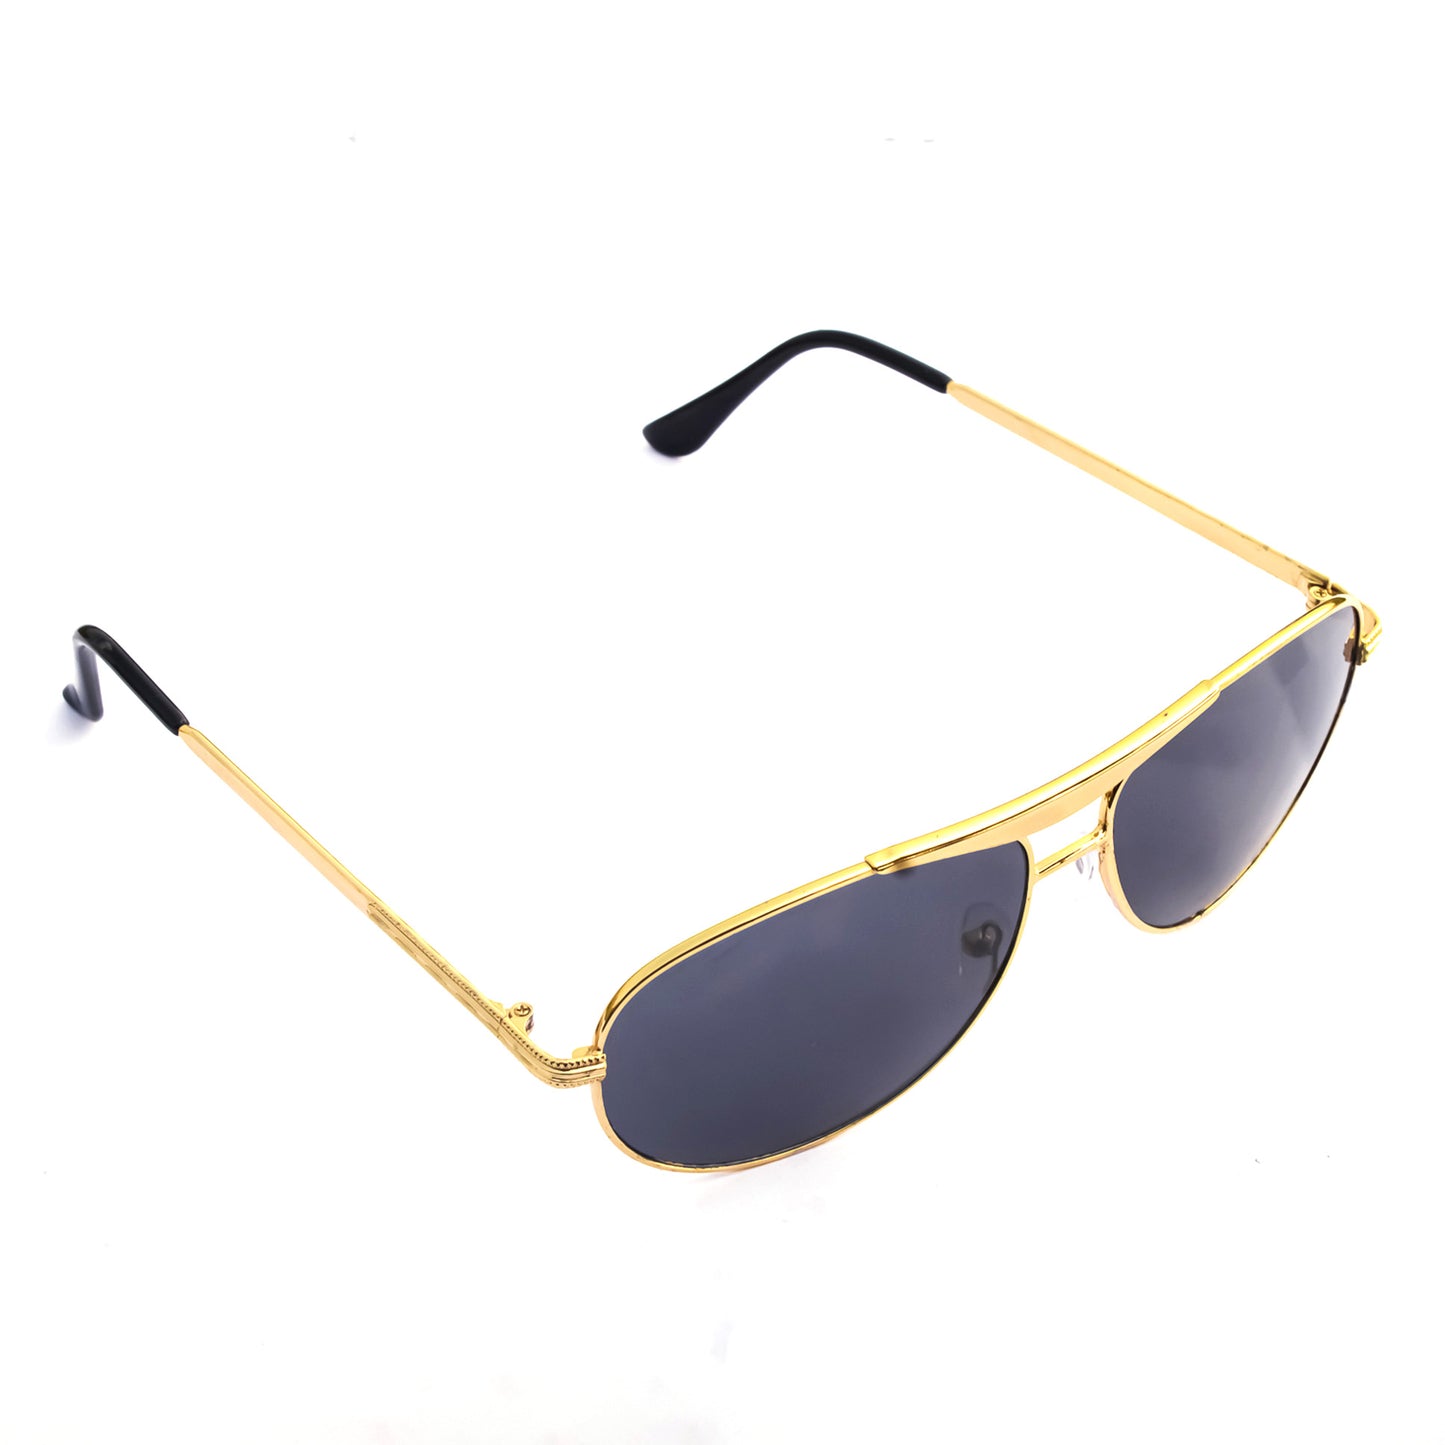 Jiebo Golden Black Aviator Sunglasses